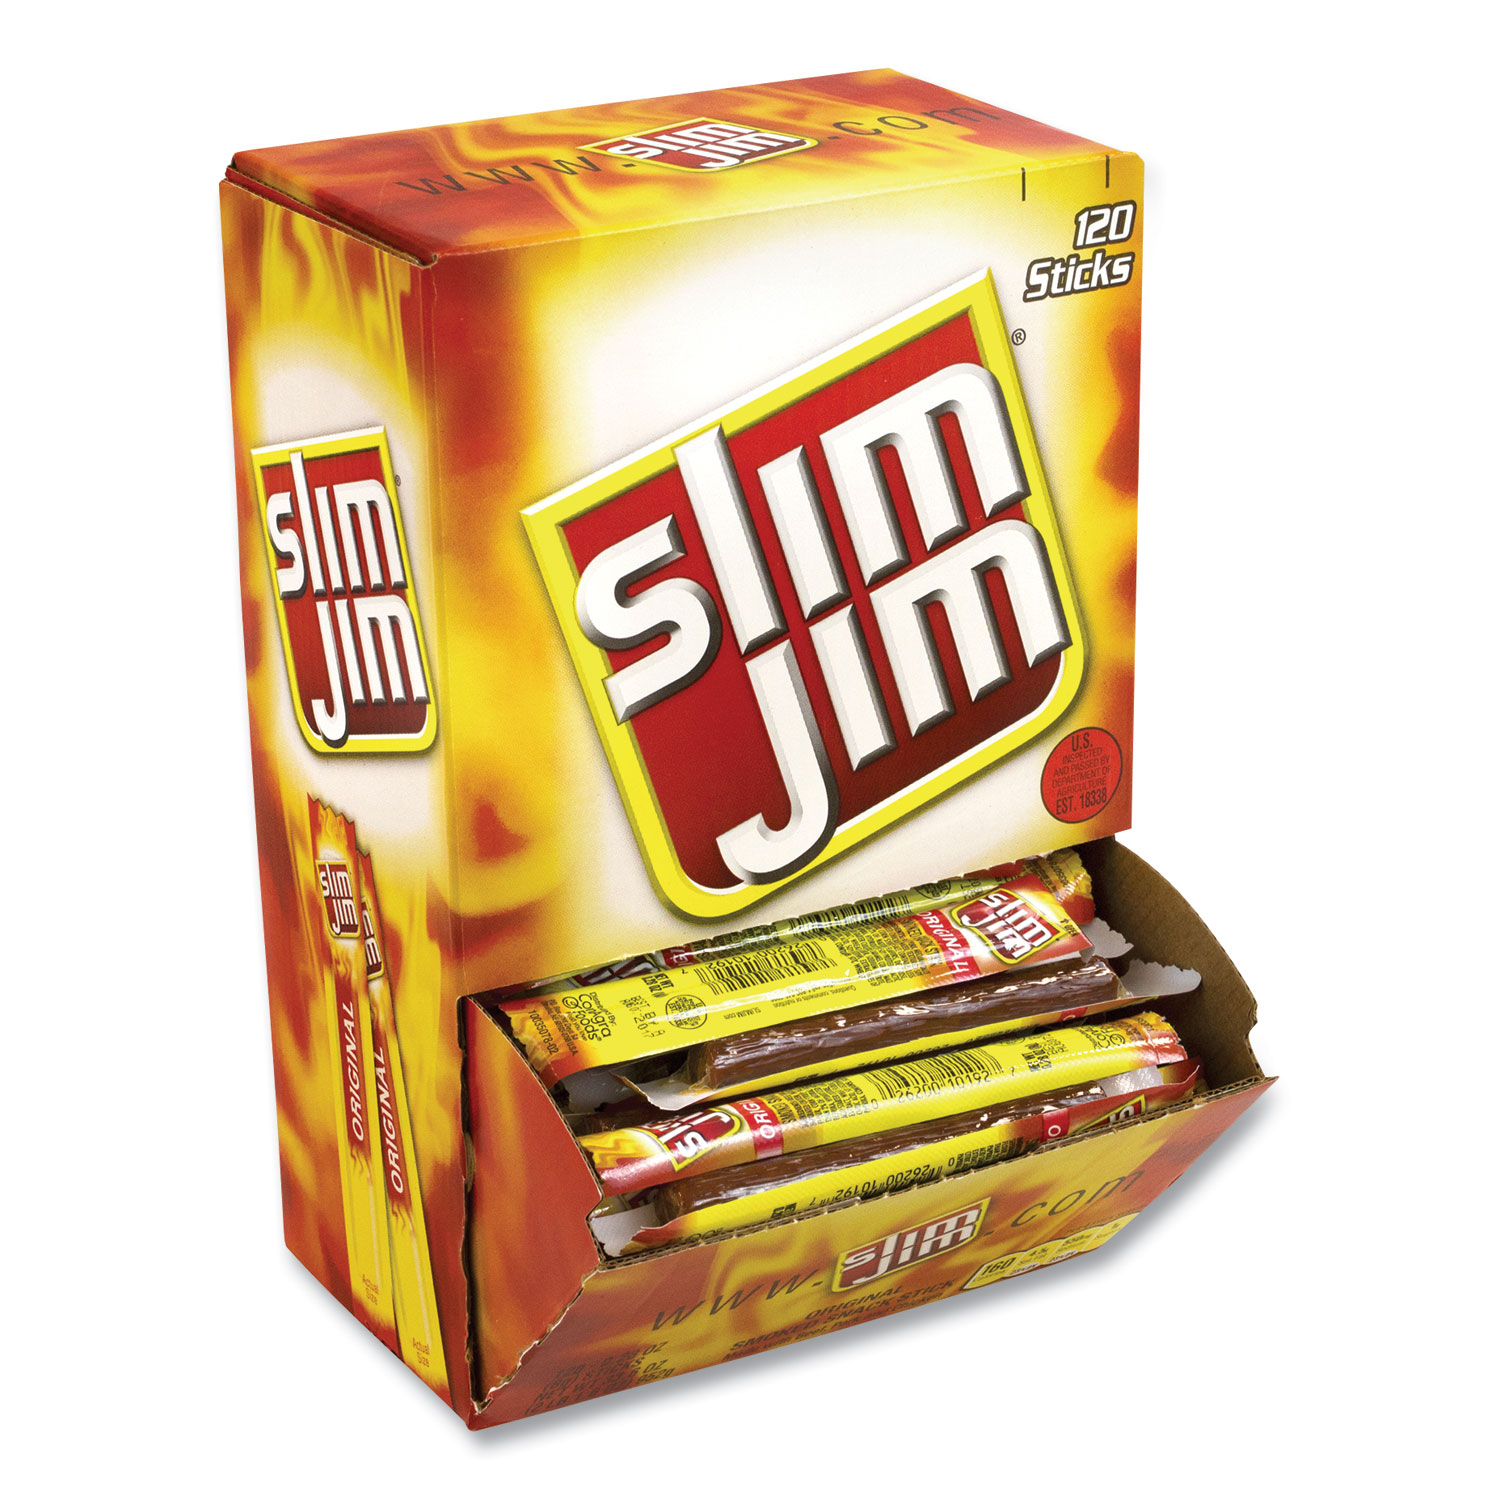 Slim Jim® Beef Jerky Meat Sticks Original, 0.28 oz Stick, 120 Sticks/Box, Free Delivery in 1-4 Business Days